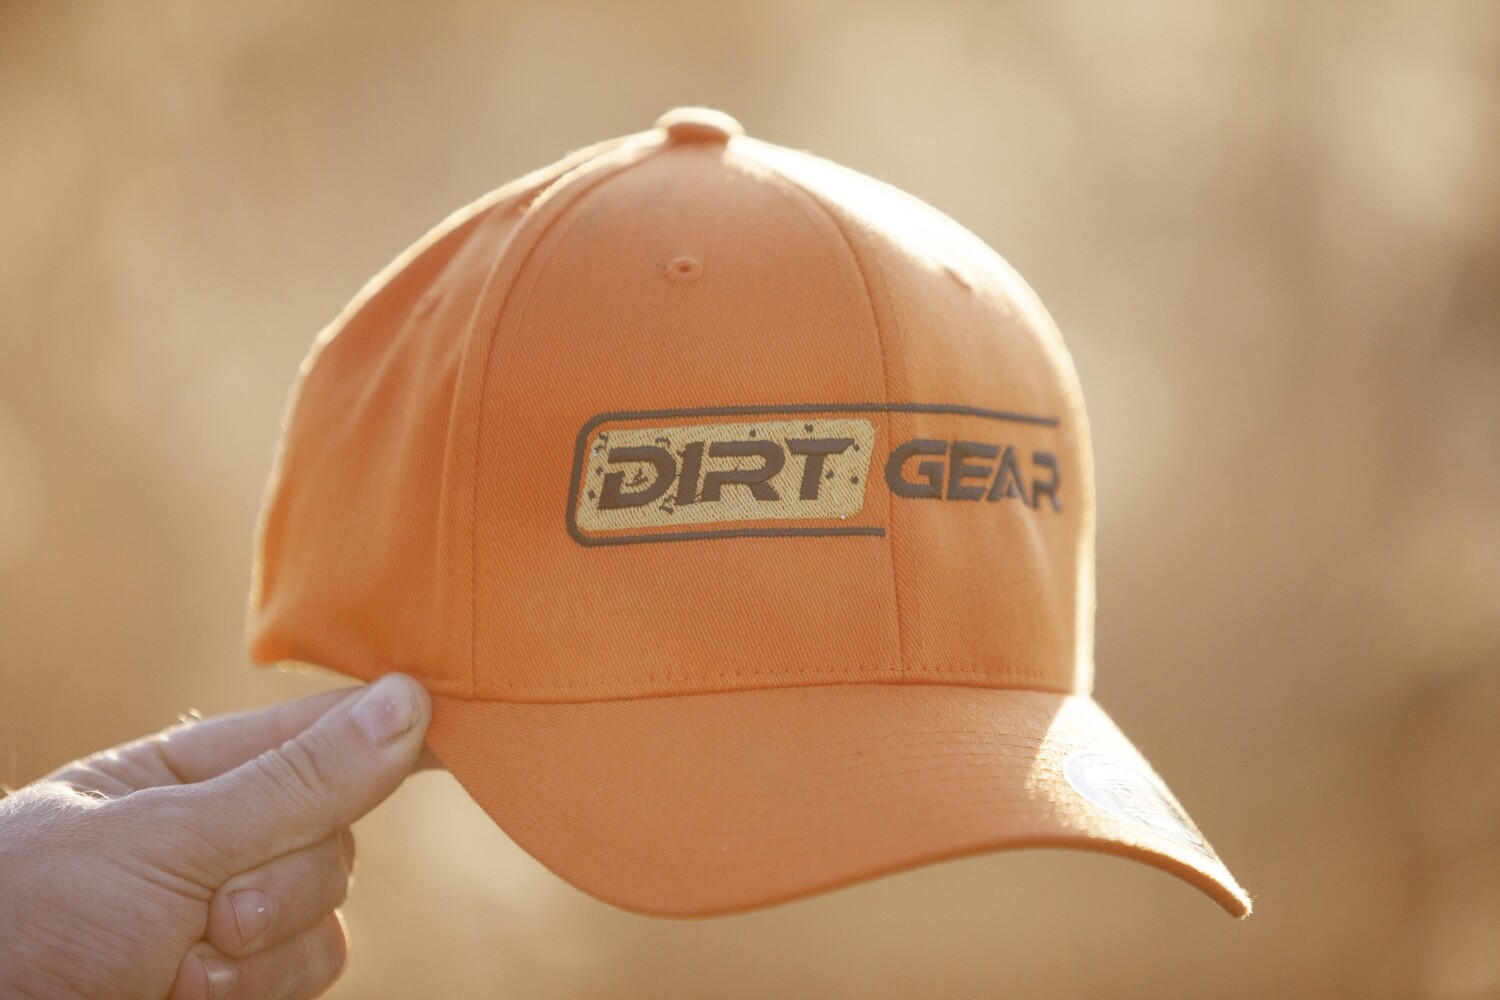 The Dirt Gear Cap